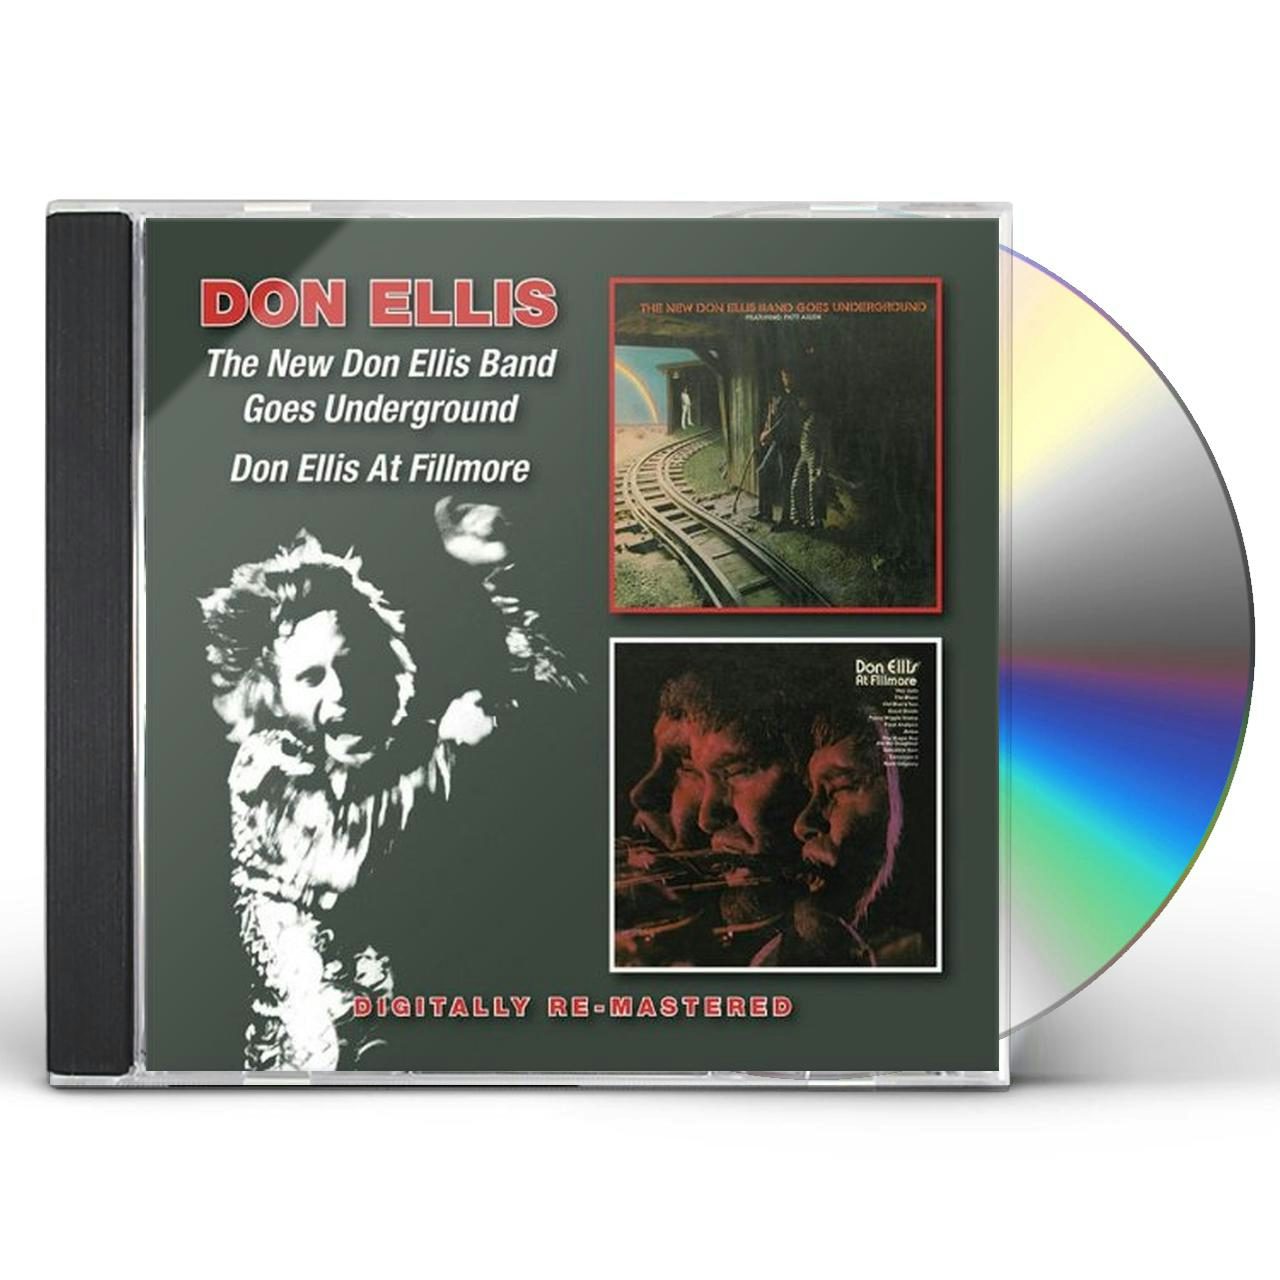 Don Ellis LIVE AT MONTEREY CD